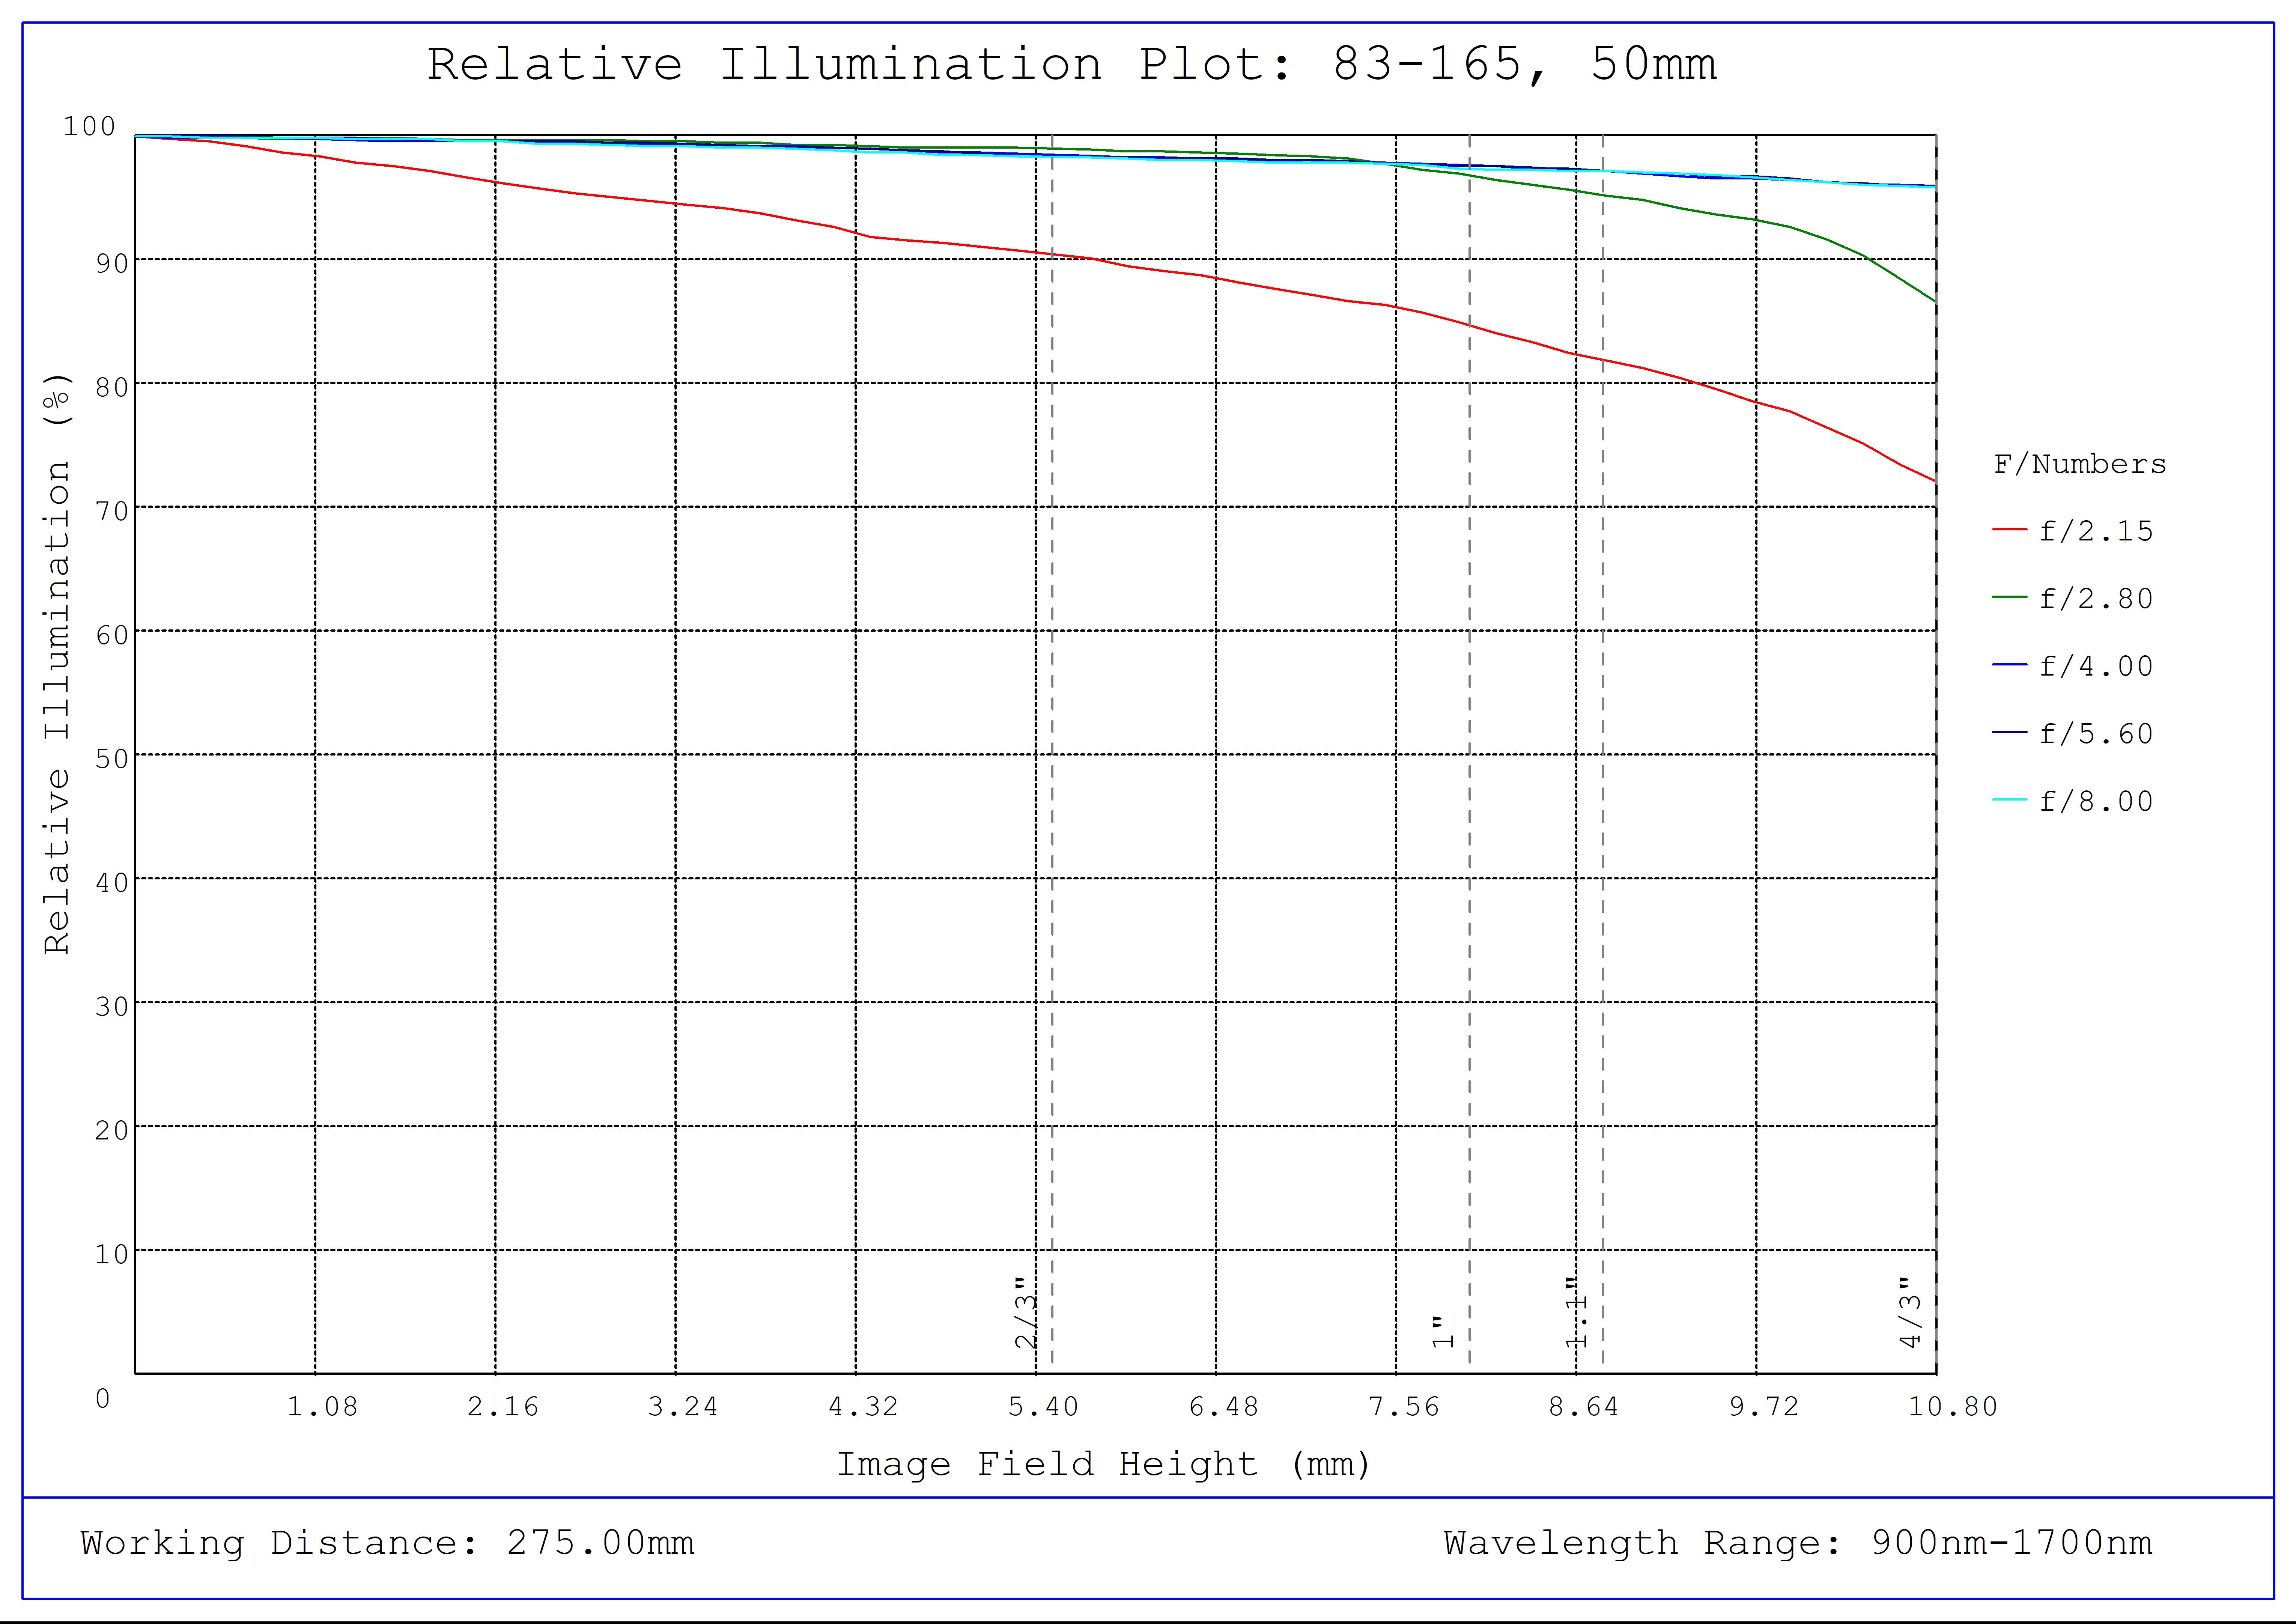 #83-165, 50mm SWIR Series Fixed Focal Length Lens, C-Mount, Relative Illumination Plot